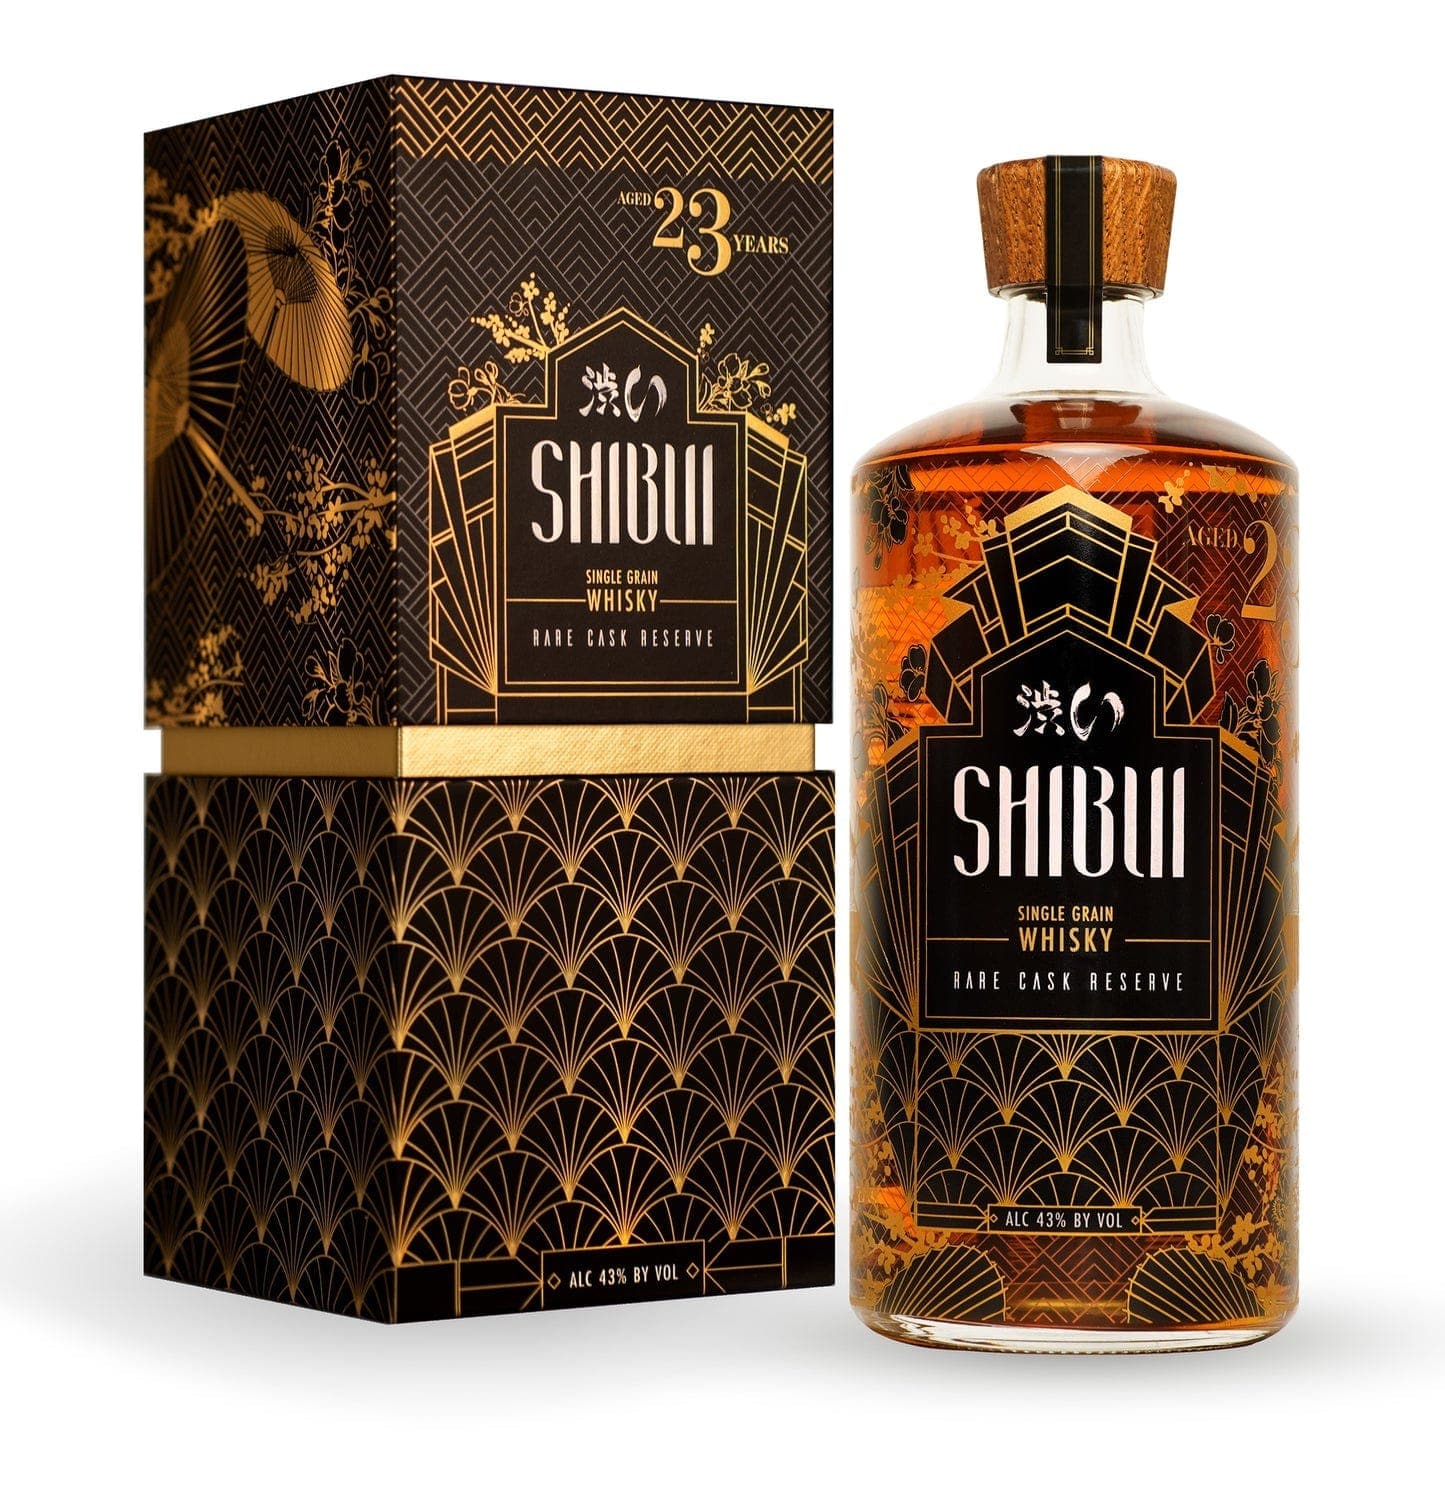 Shibui 23 Year Japanese Rare Cask Reserve Whisky - Barbank